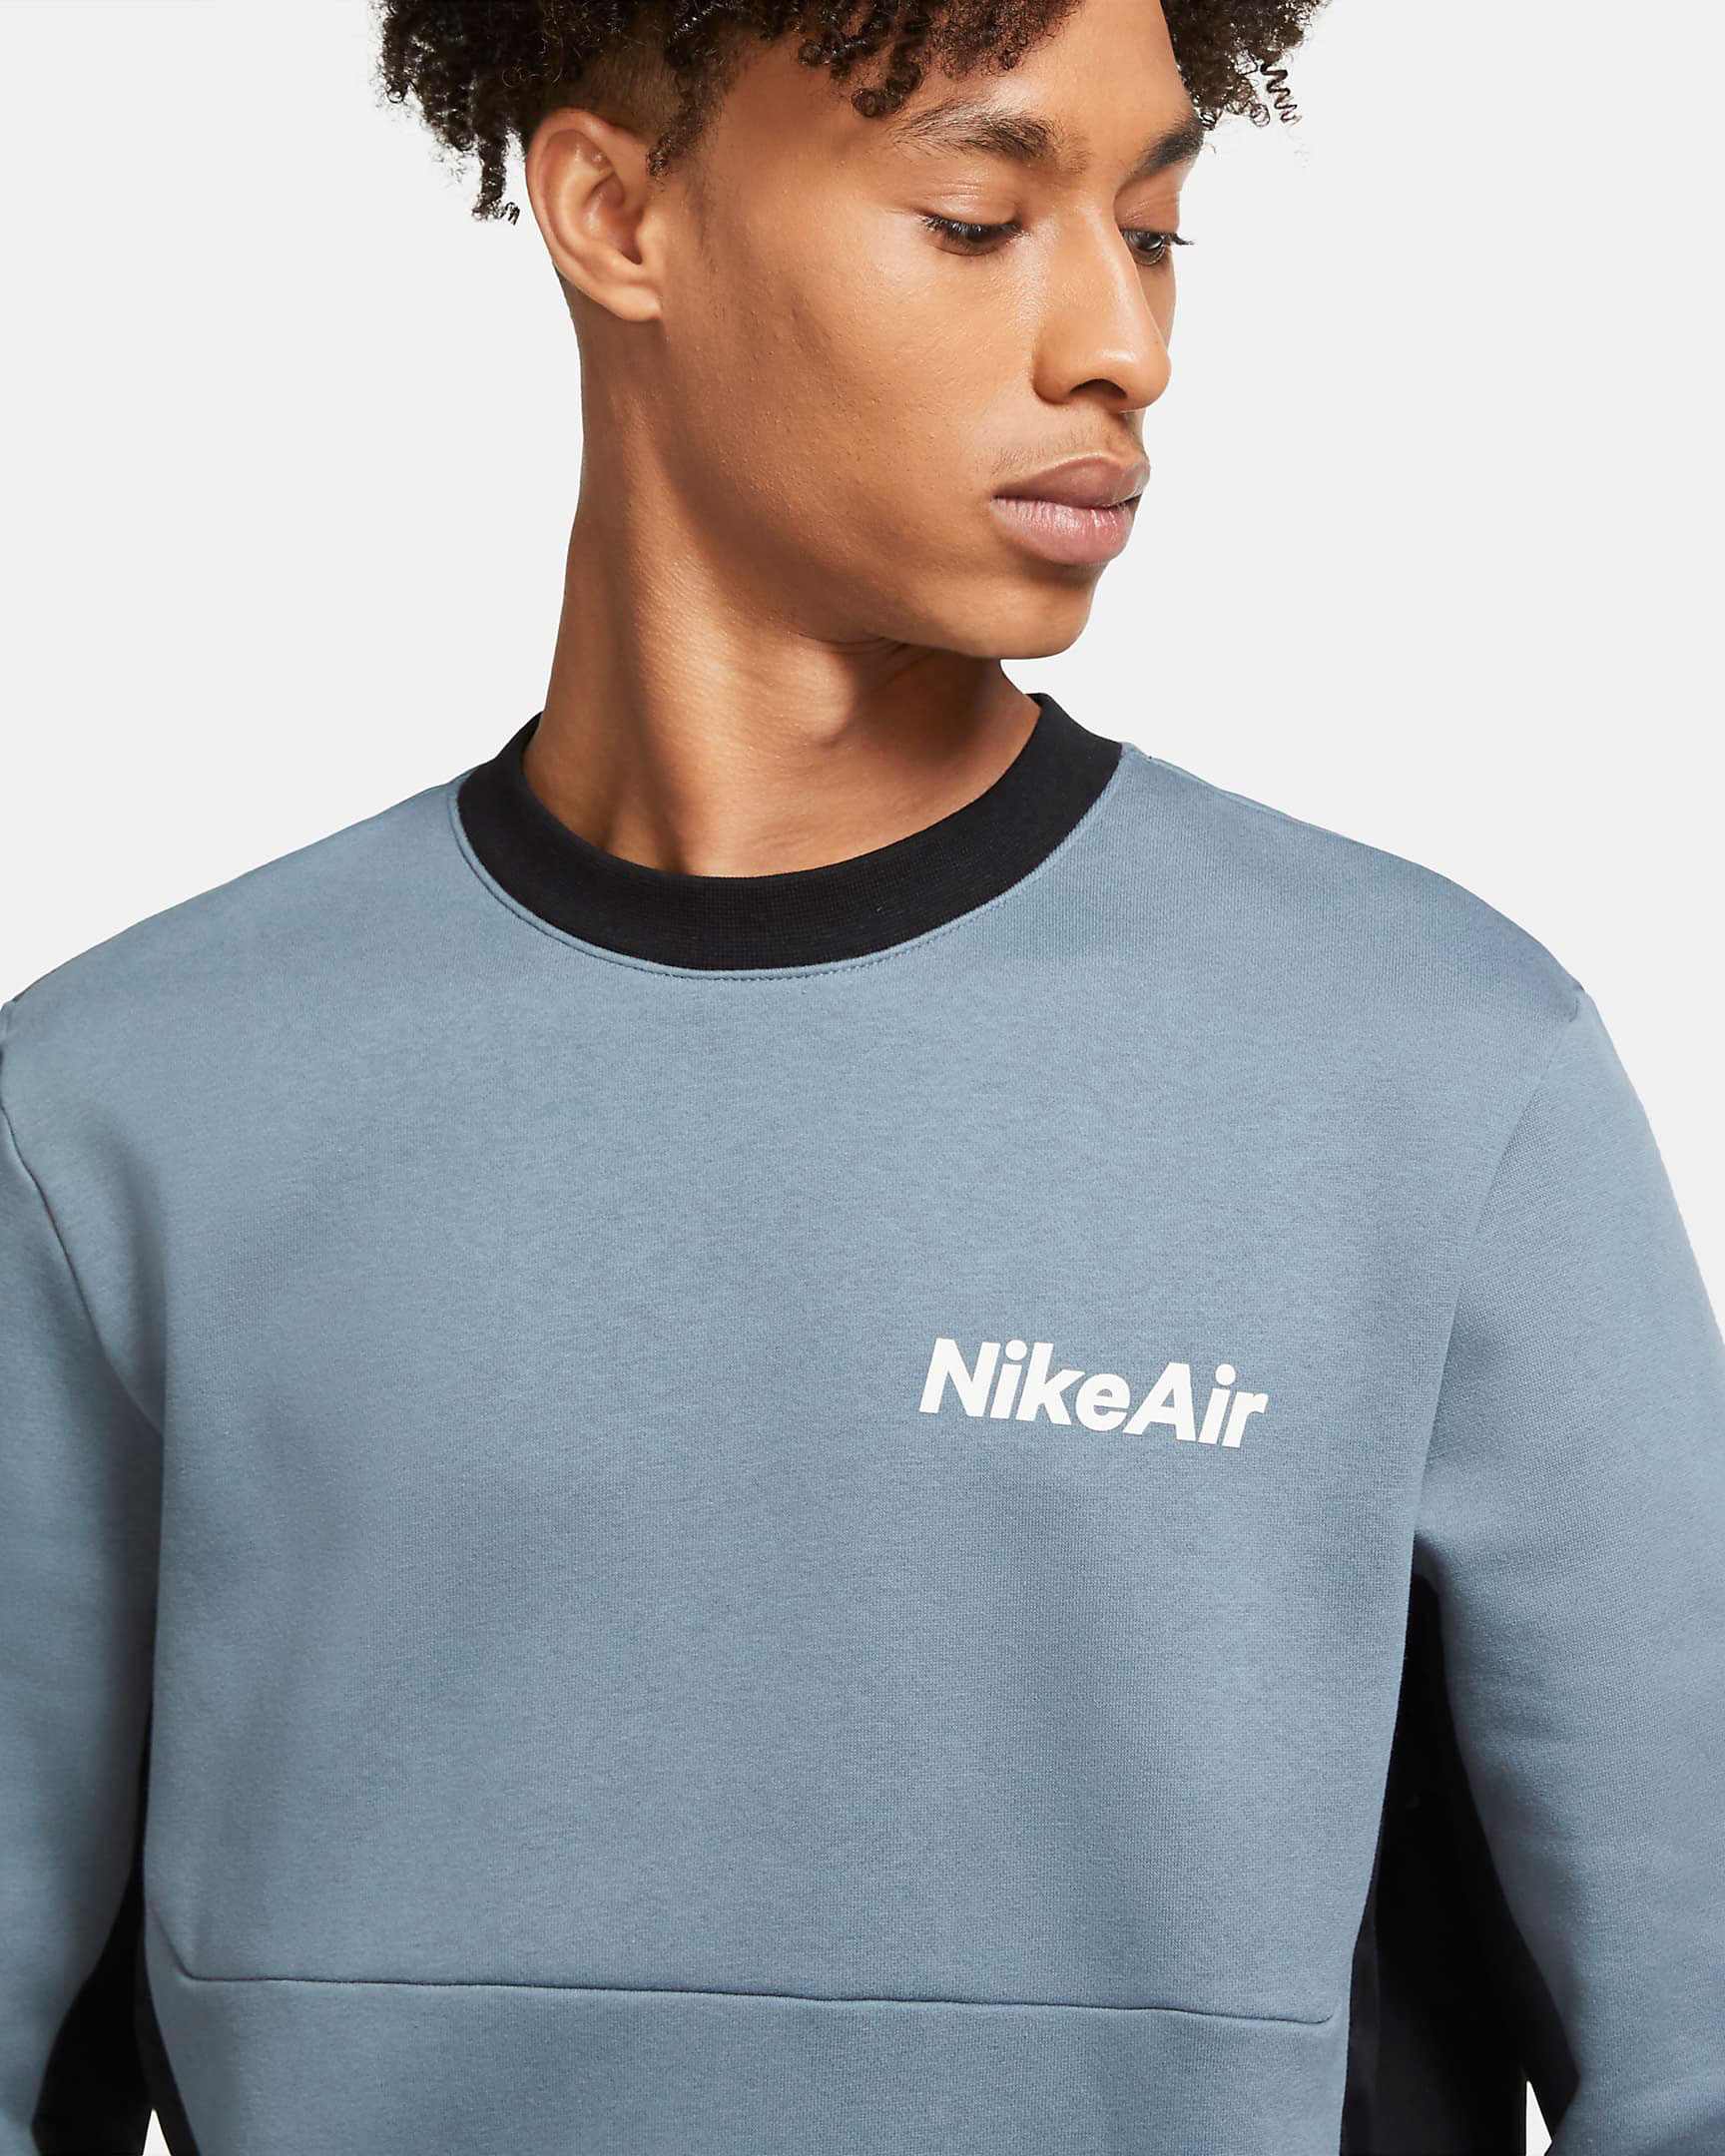 nike-air-fleece-crew-sweatshirt-ozone-blue-1